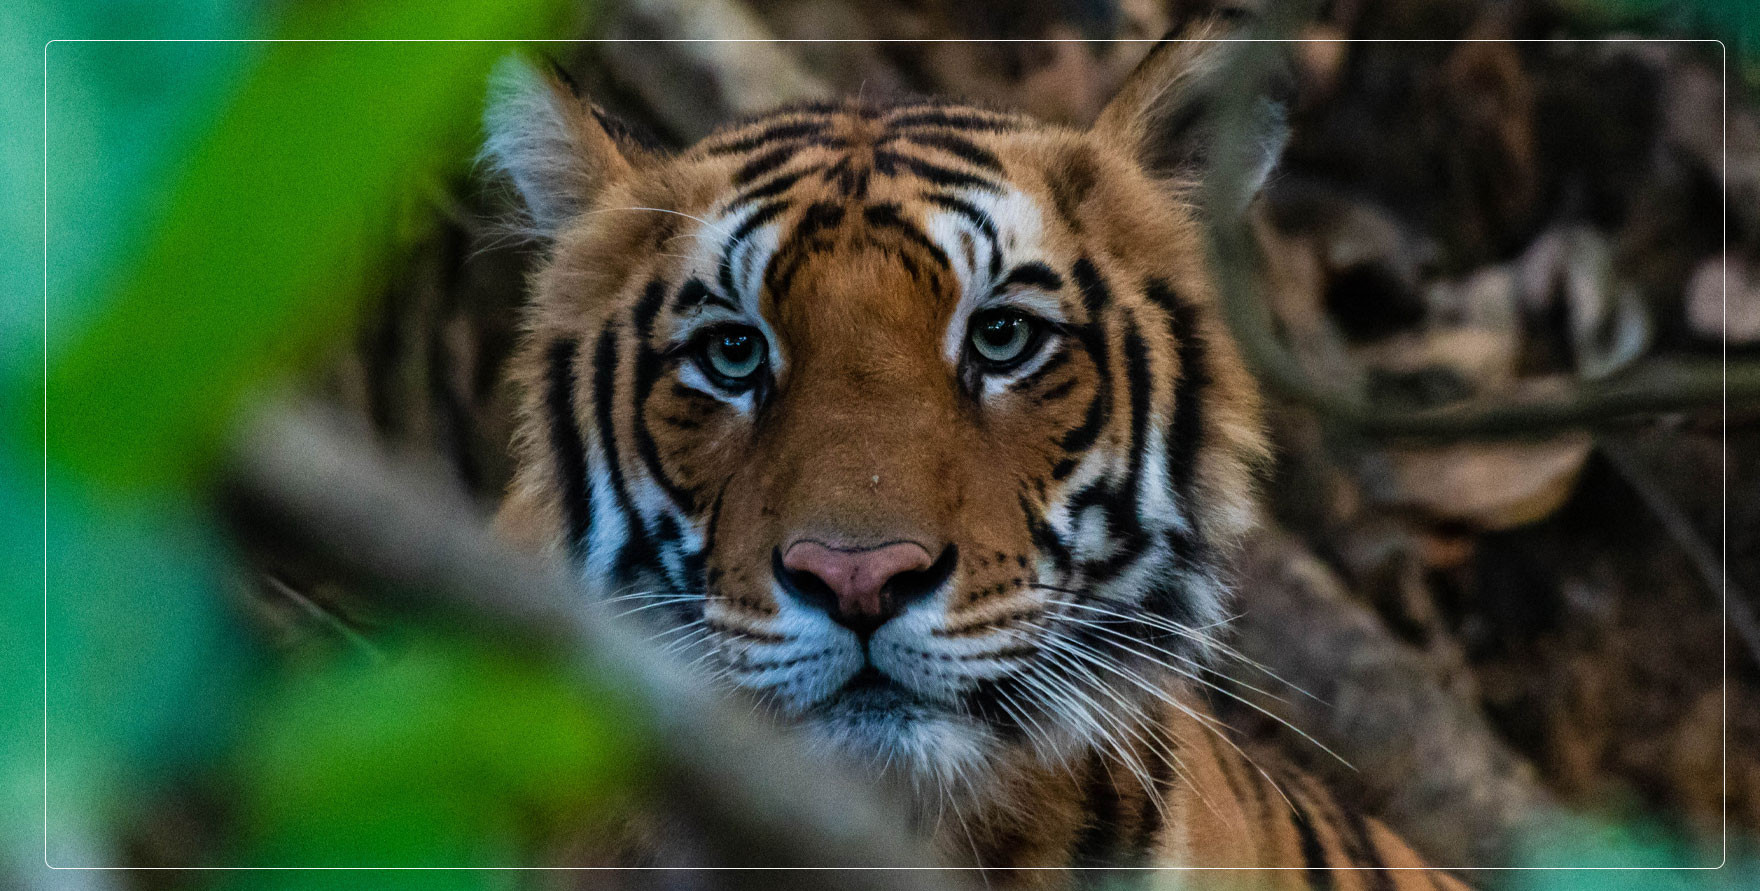 deepak rajbangshi-wildlife photographer-photo-tiger-bardiya 31706920197.jpg